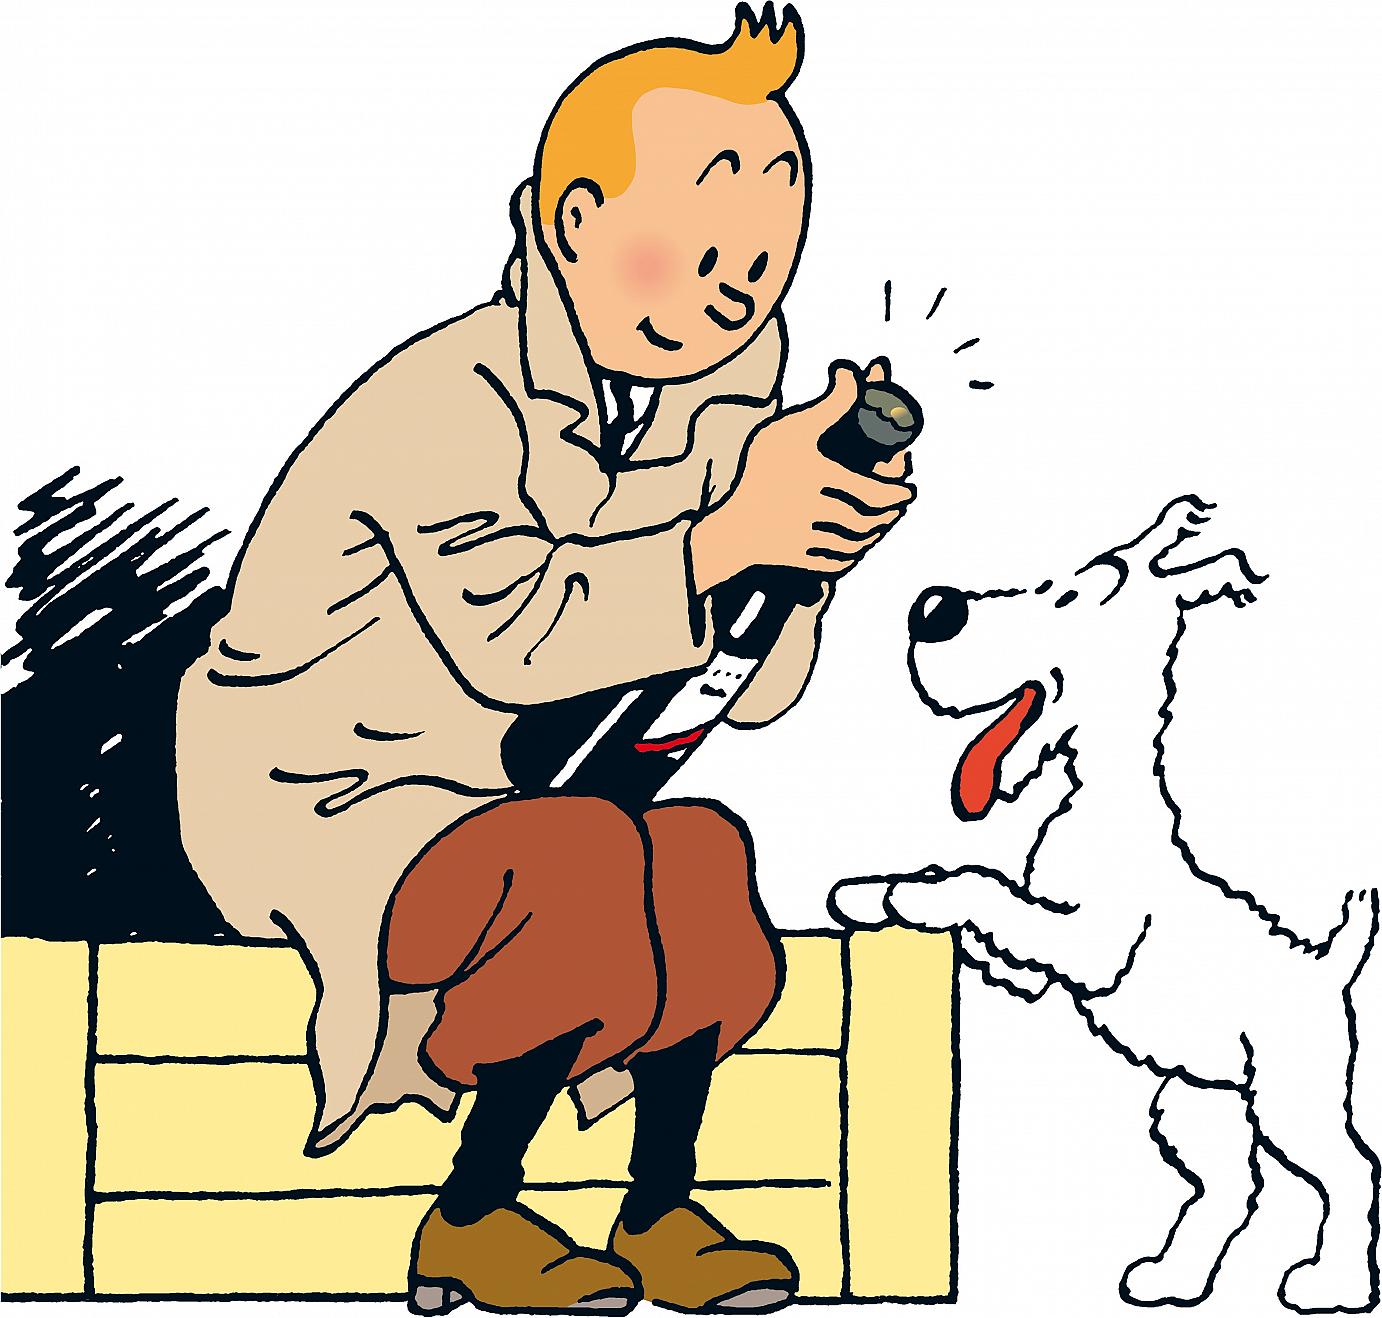 Tintin and Snowy